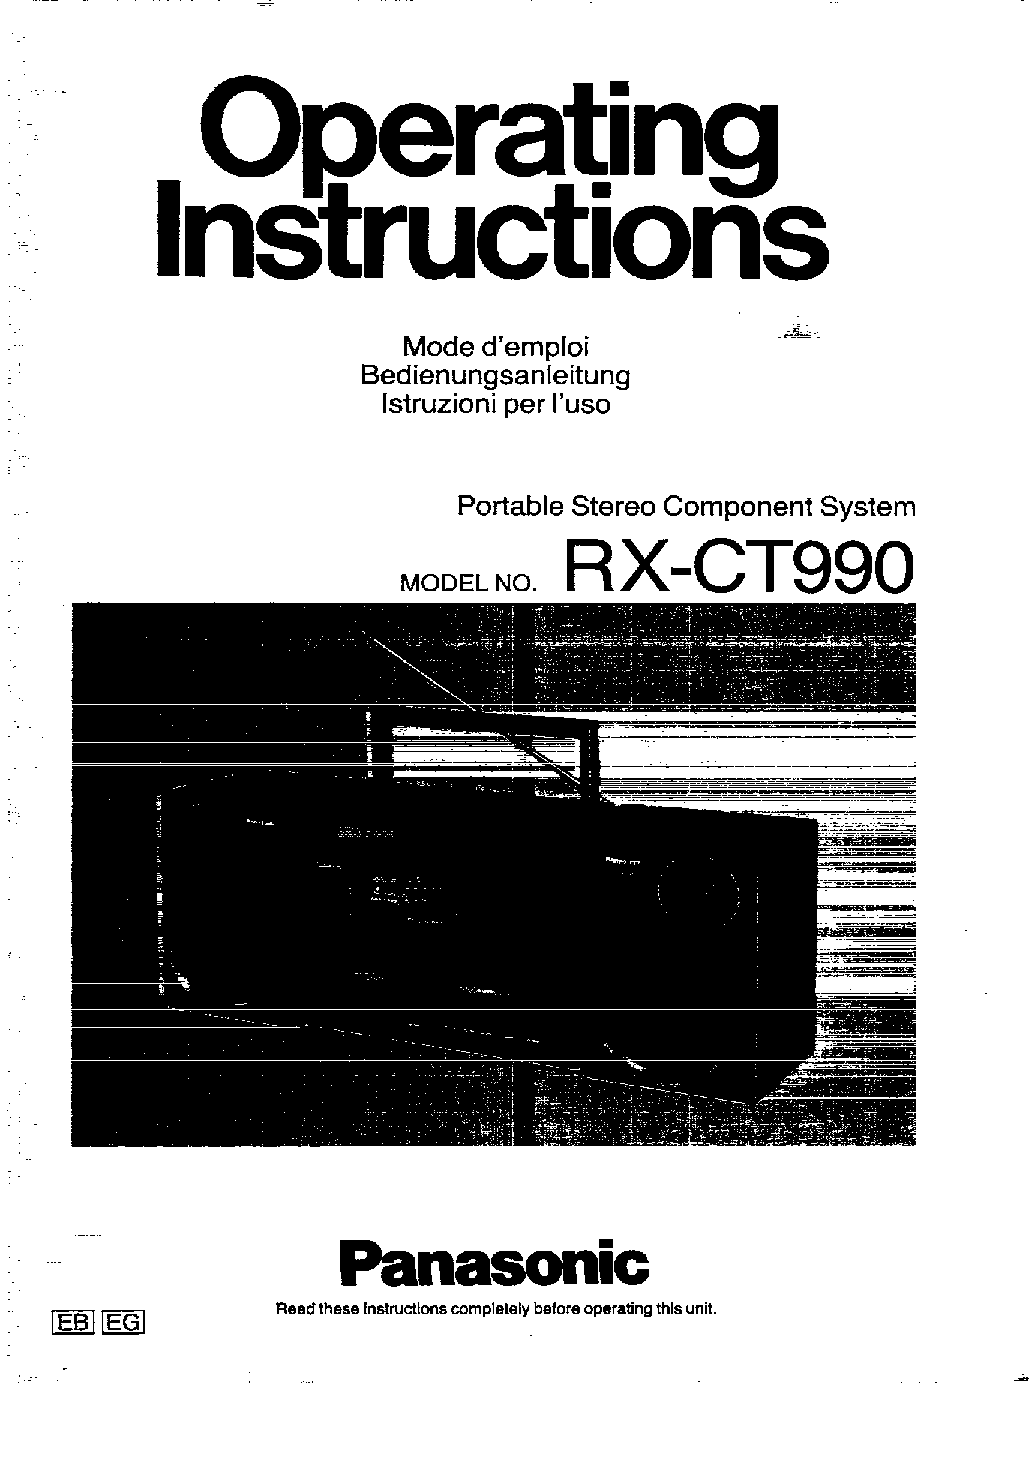 Panasonic RX-CT990 User Manual